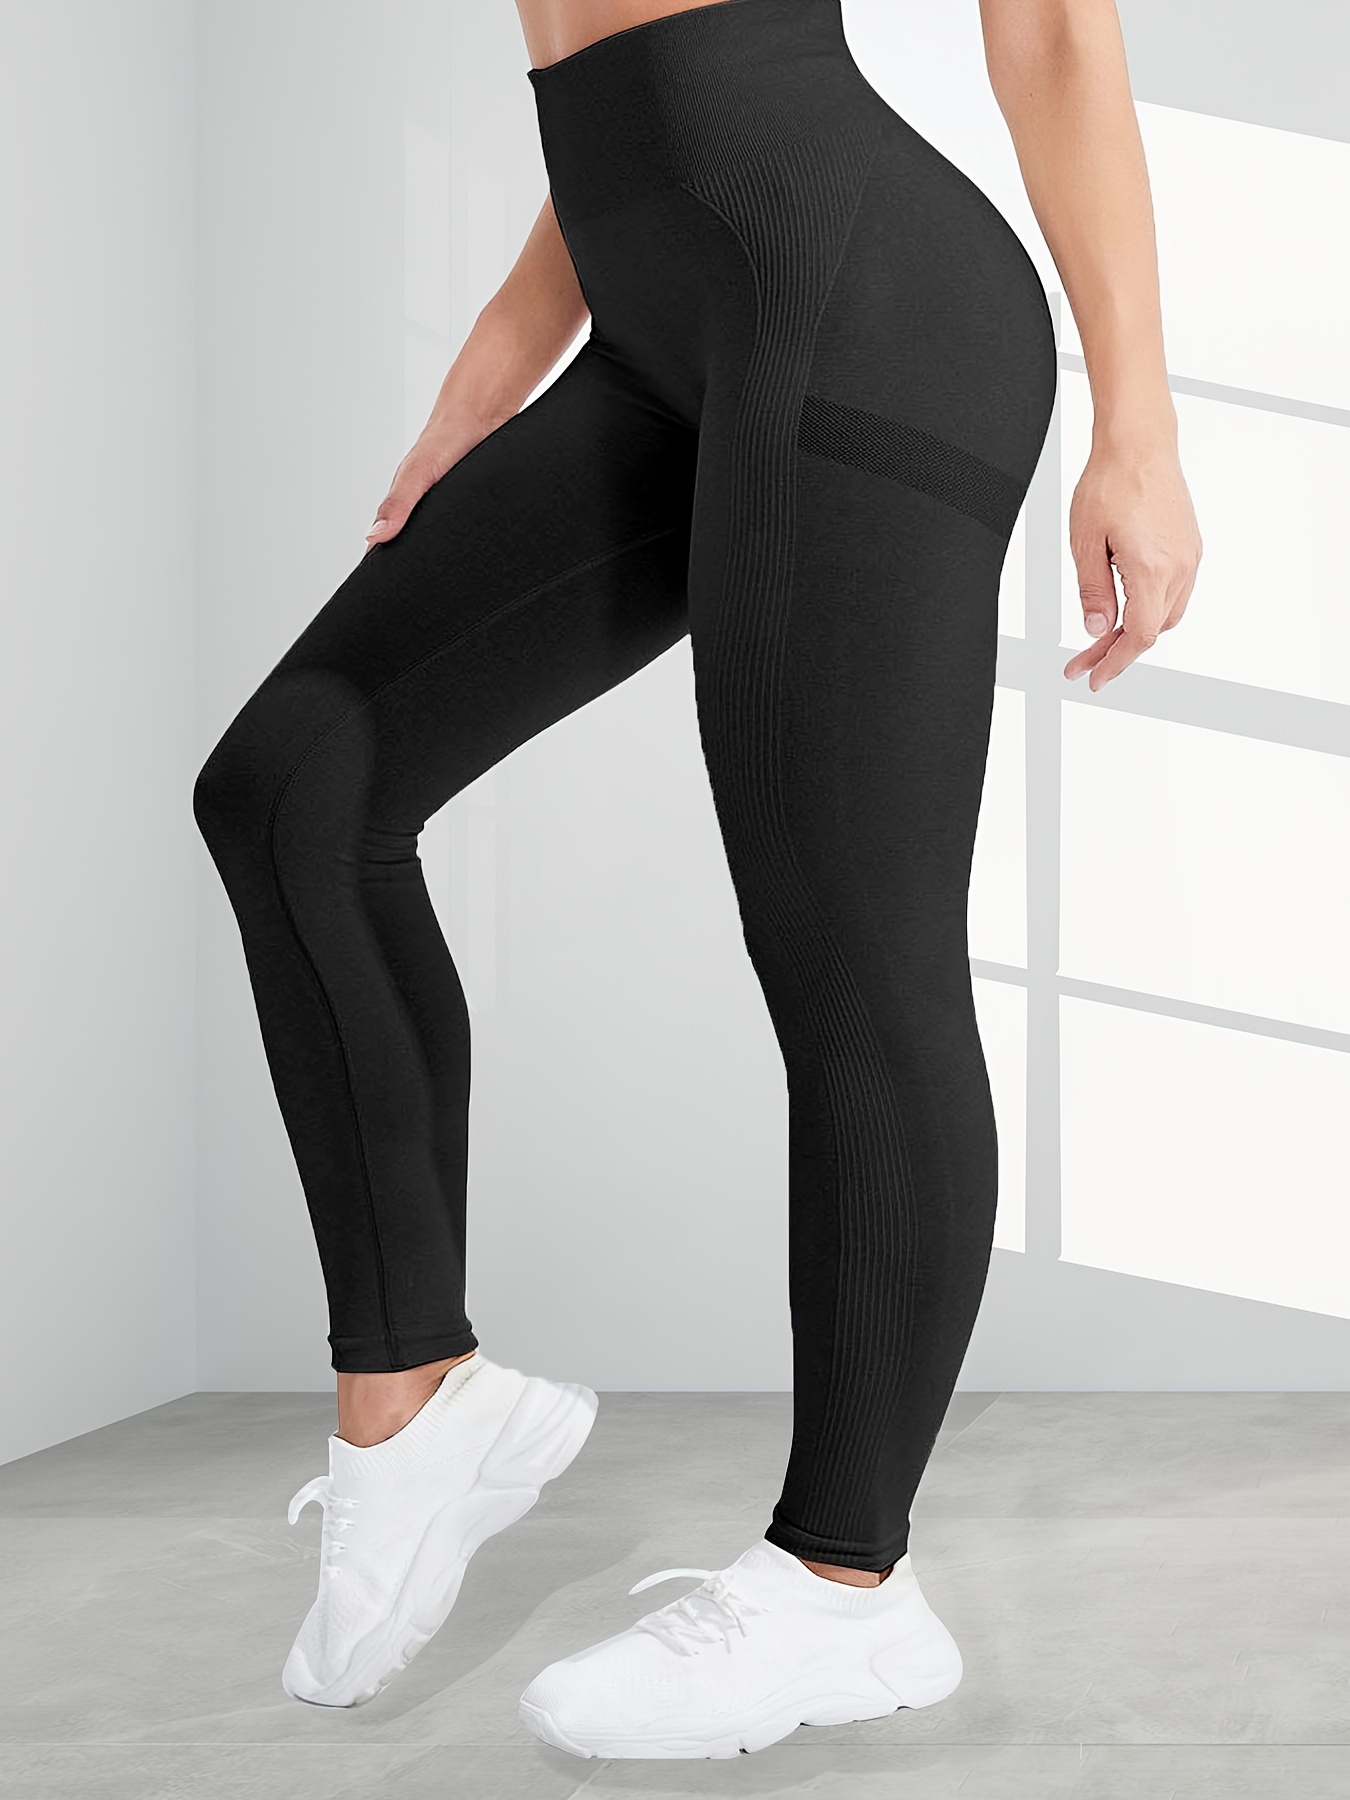 Women's Yoga Pants Tummy Control Butt Lift High Waist Yoga Fitness Gym  Workout Leggings Bottoms Black Green Grey Sports Activewear High Elasticity  Ski